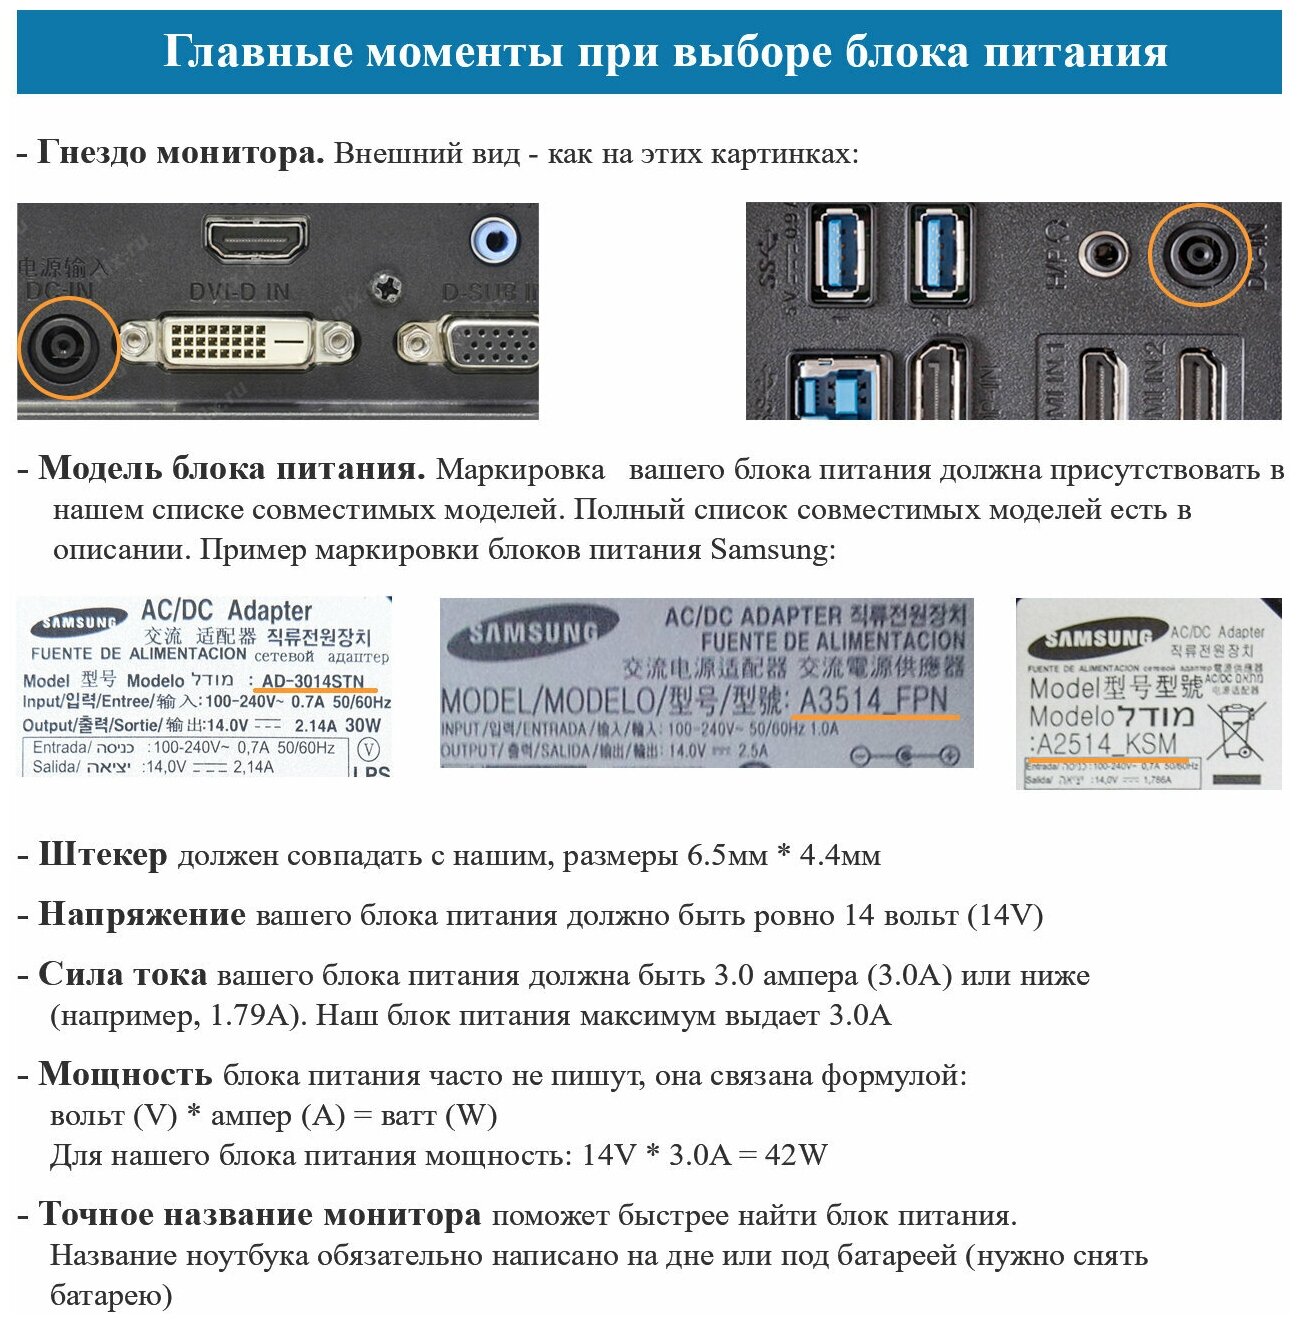 Блок питания для монитора/телевизора Samsung 14V, 3A, 42W (штекер 6.5х4.4), AD-3014B, AP04214-UV, A2514_KSM